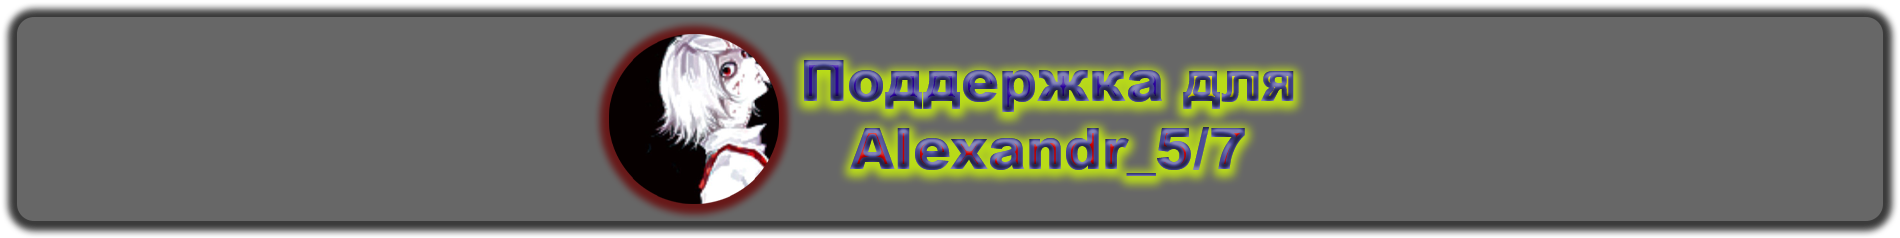 creator cover Alexandr_5